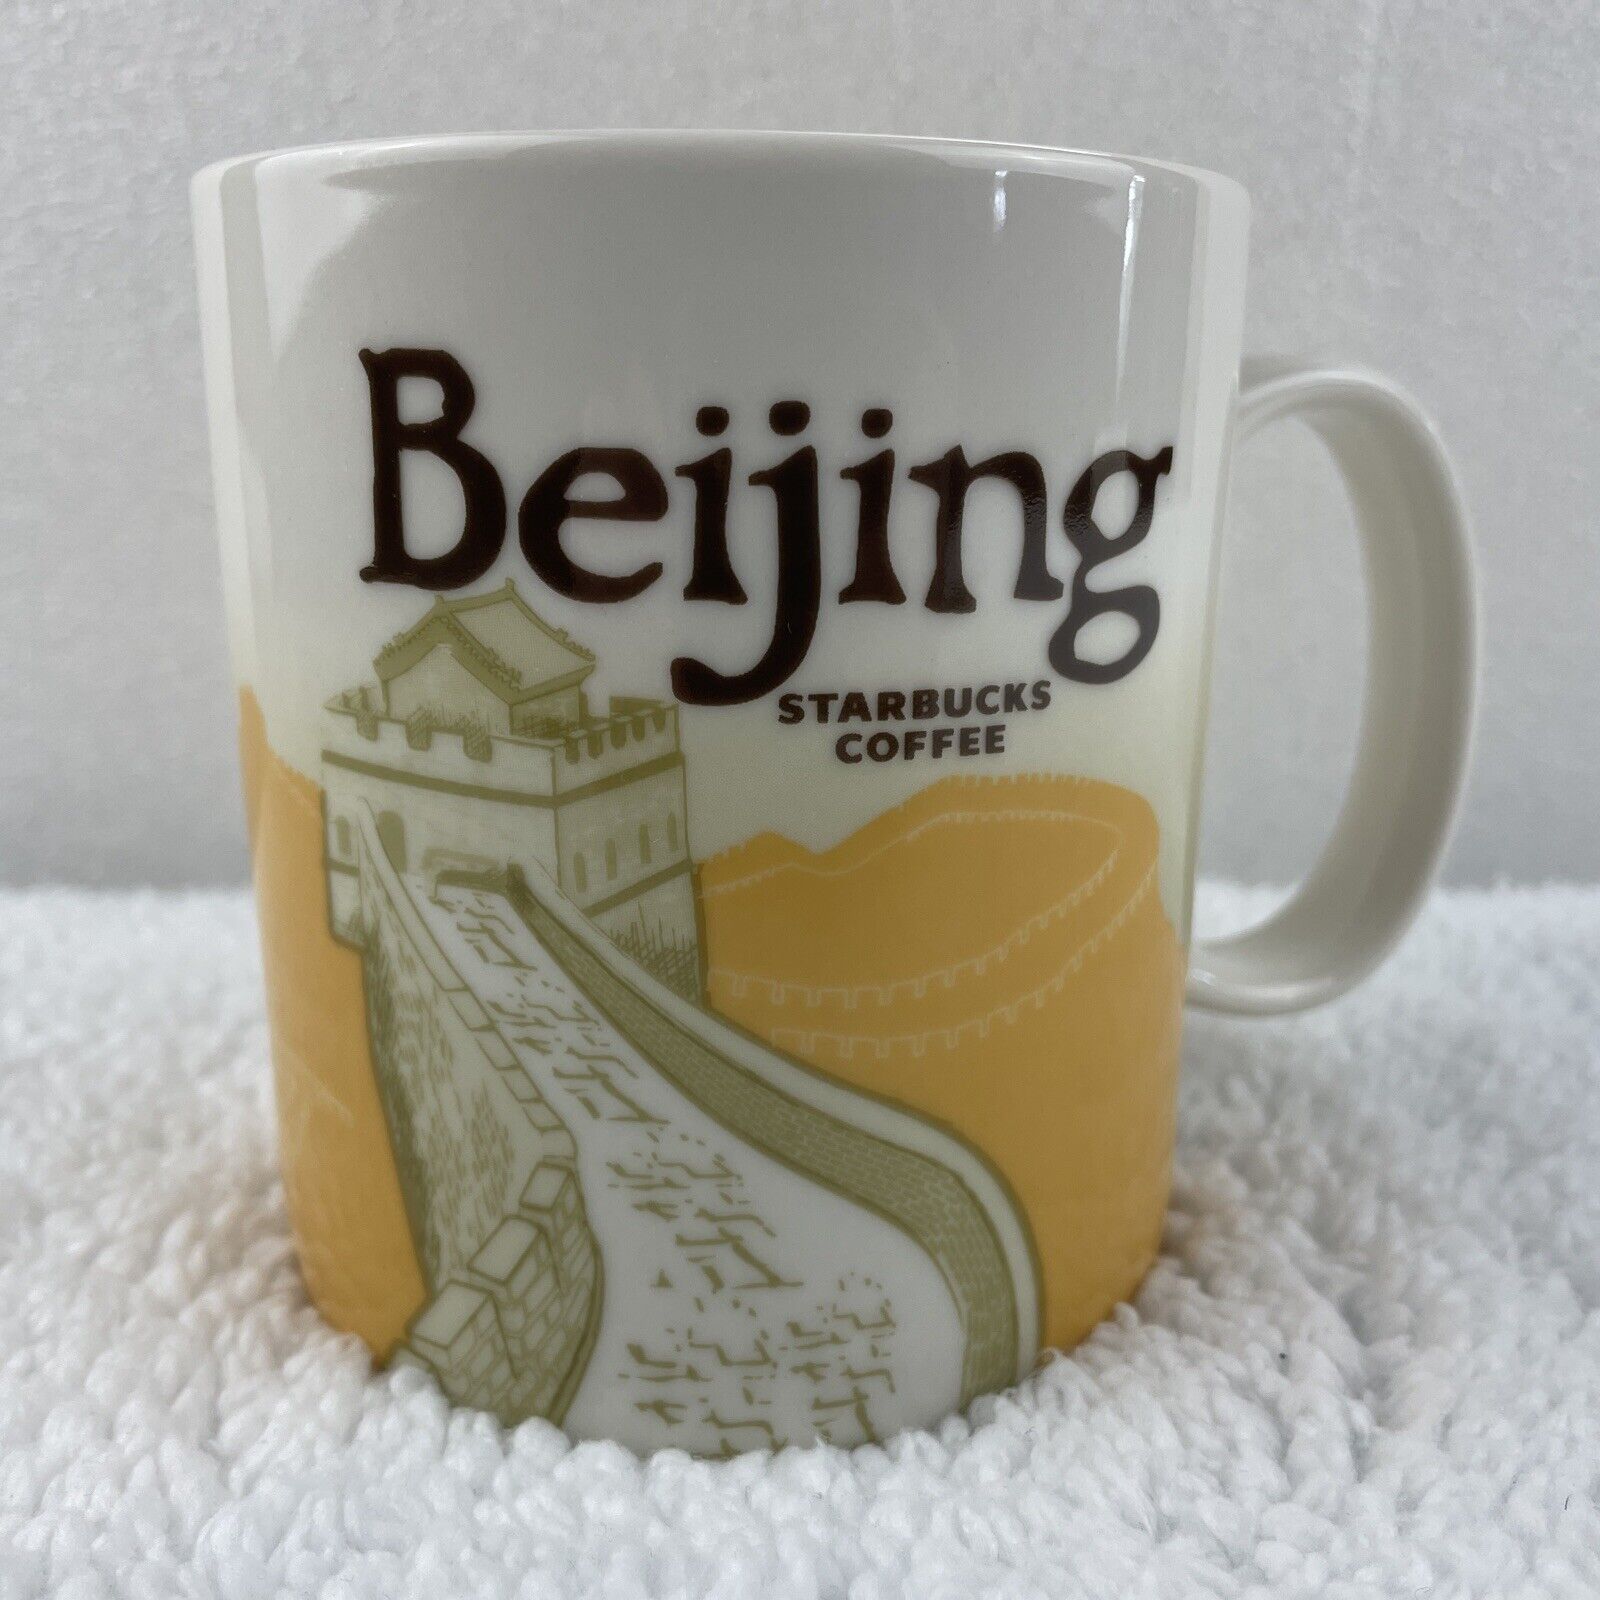 2012 Starbucks Beijing Global Icon Collector Series 16 oz Coffee Cup Mug